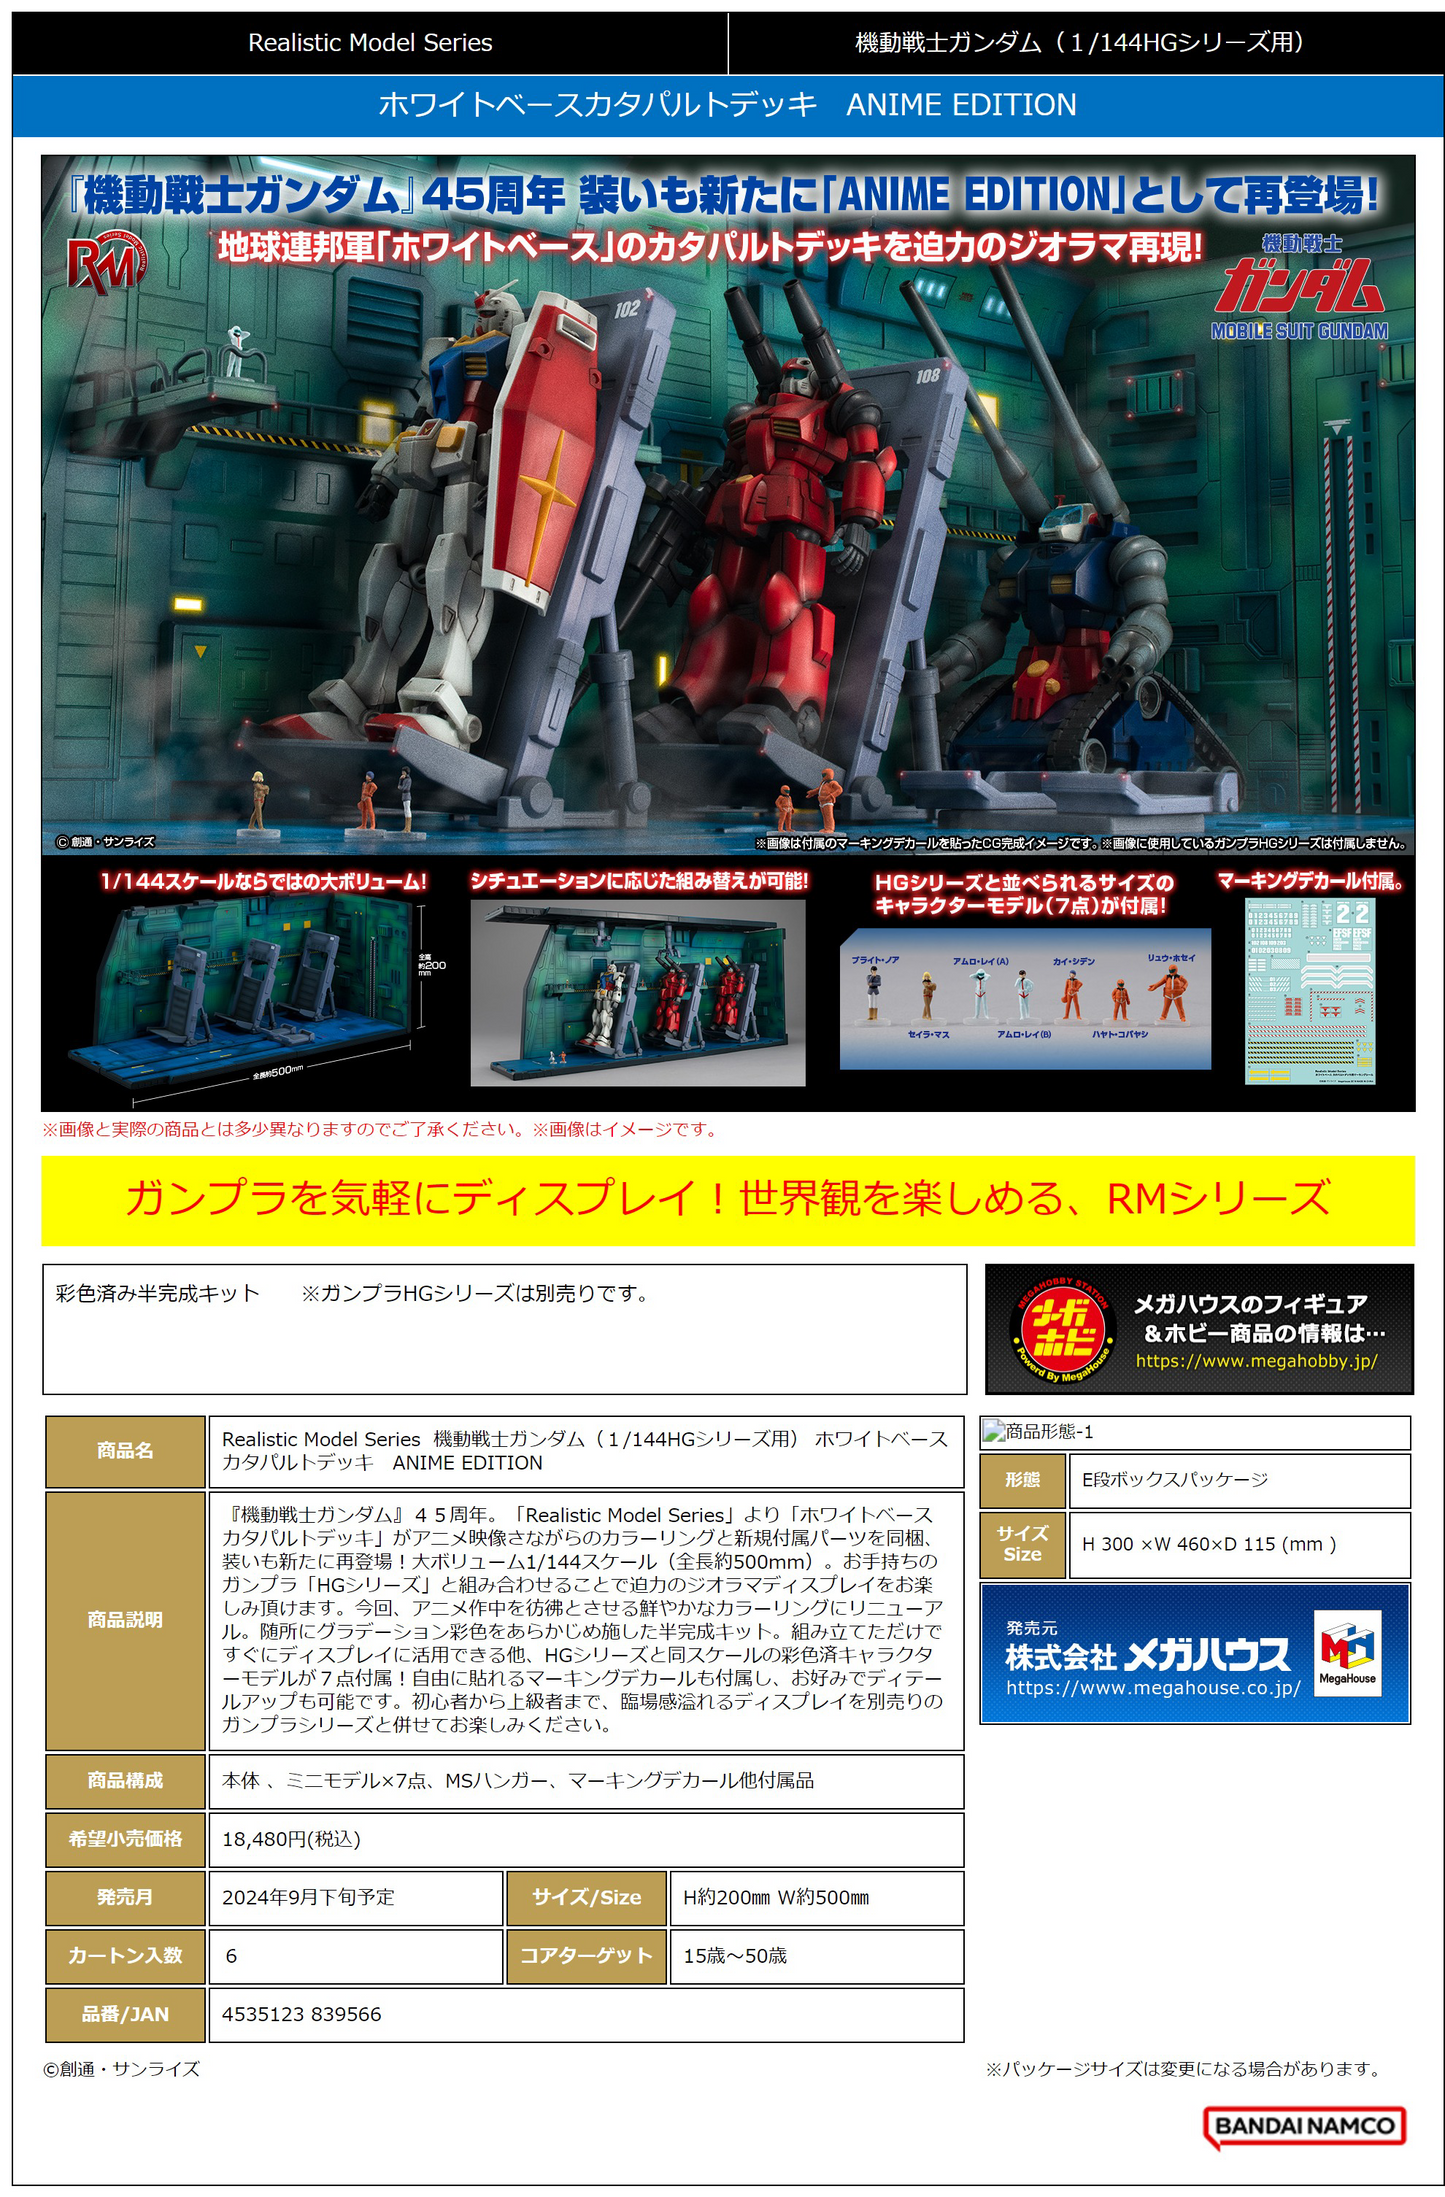 MegaHouse Realistic Model Series Mobile Suit Gundam White Base Catapult Deck ANIME EDITION